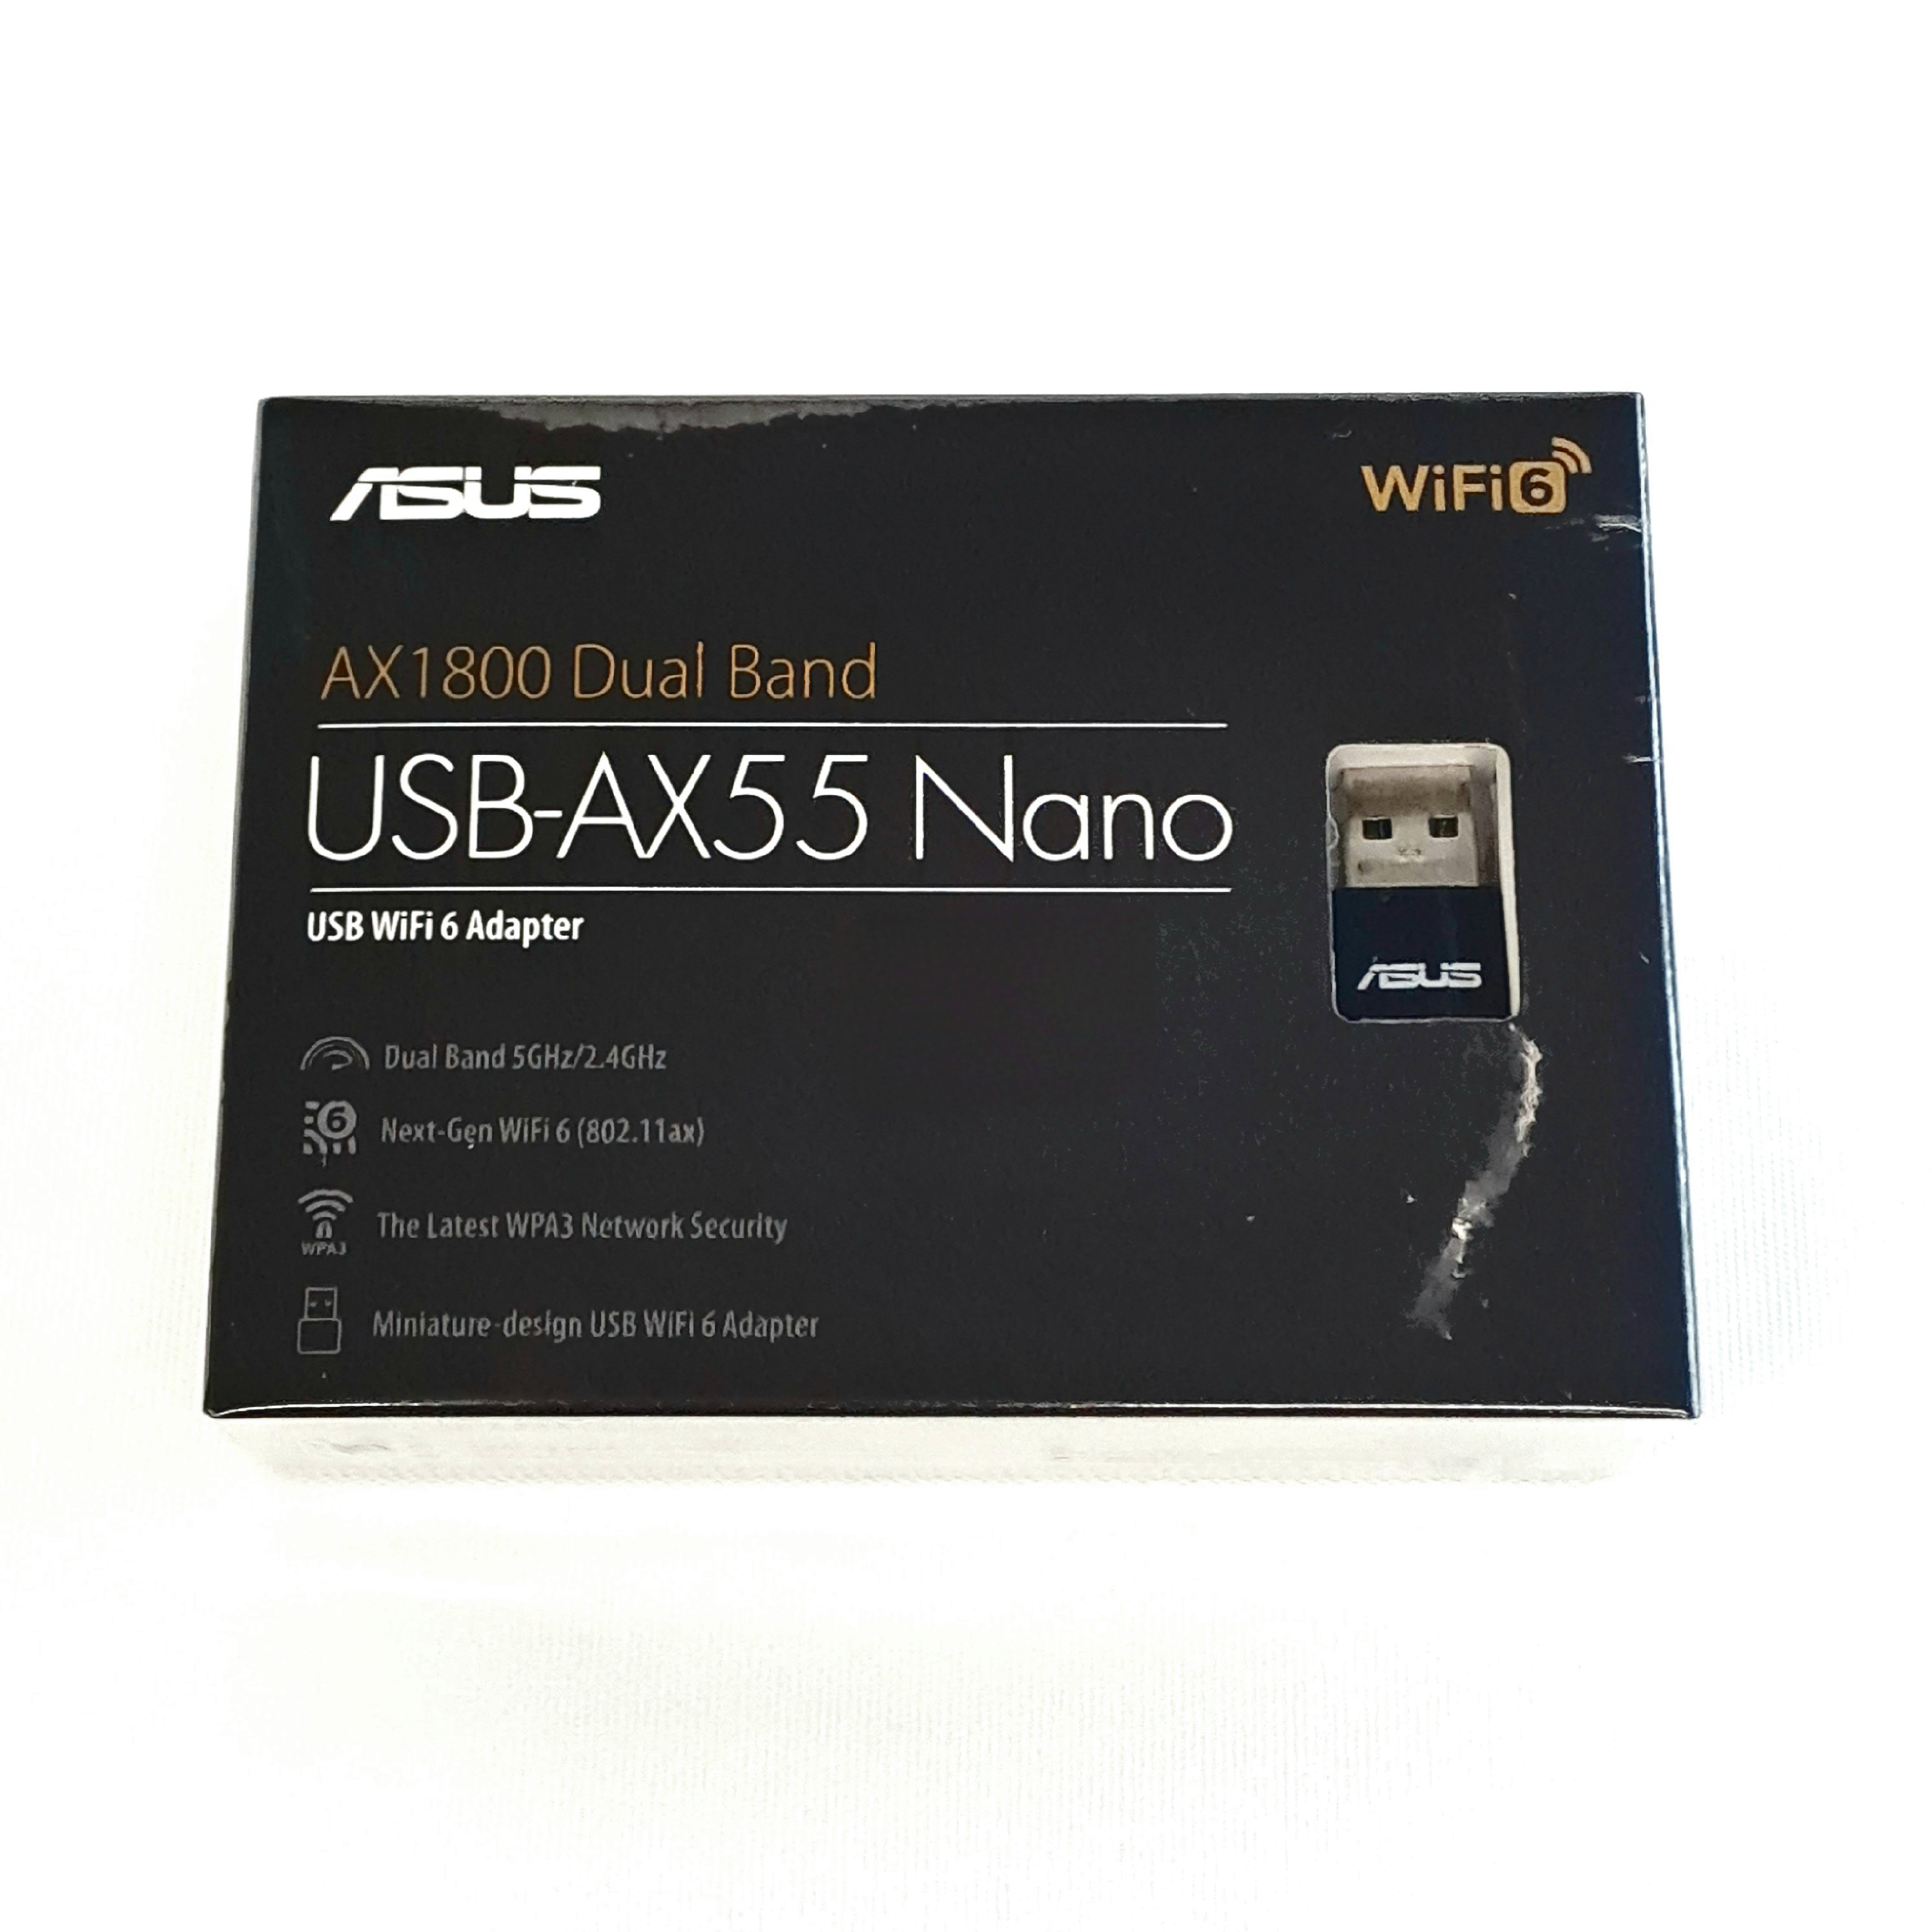 ASUS AX1800 Dual Band WiFi 6 USB Adapter